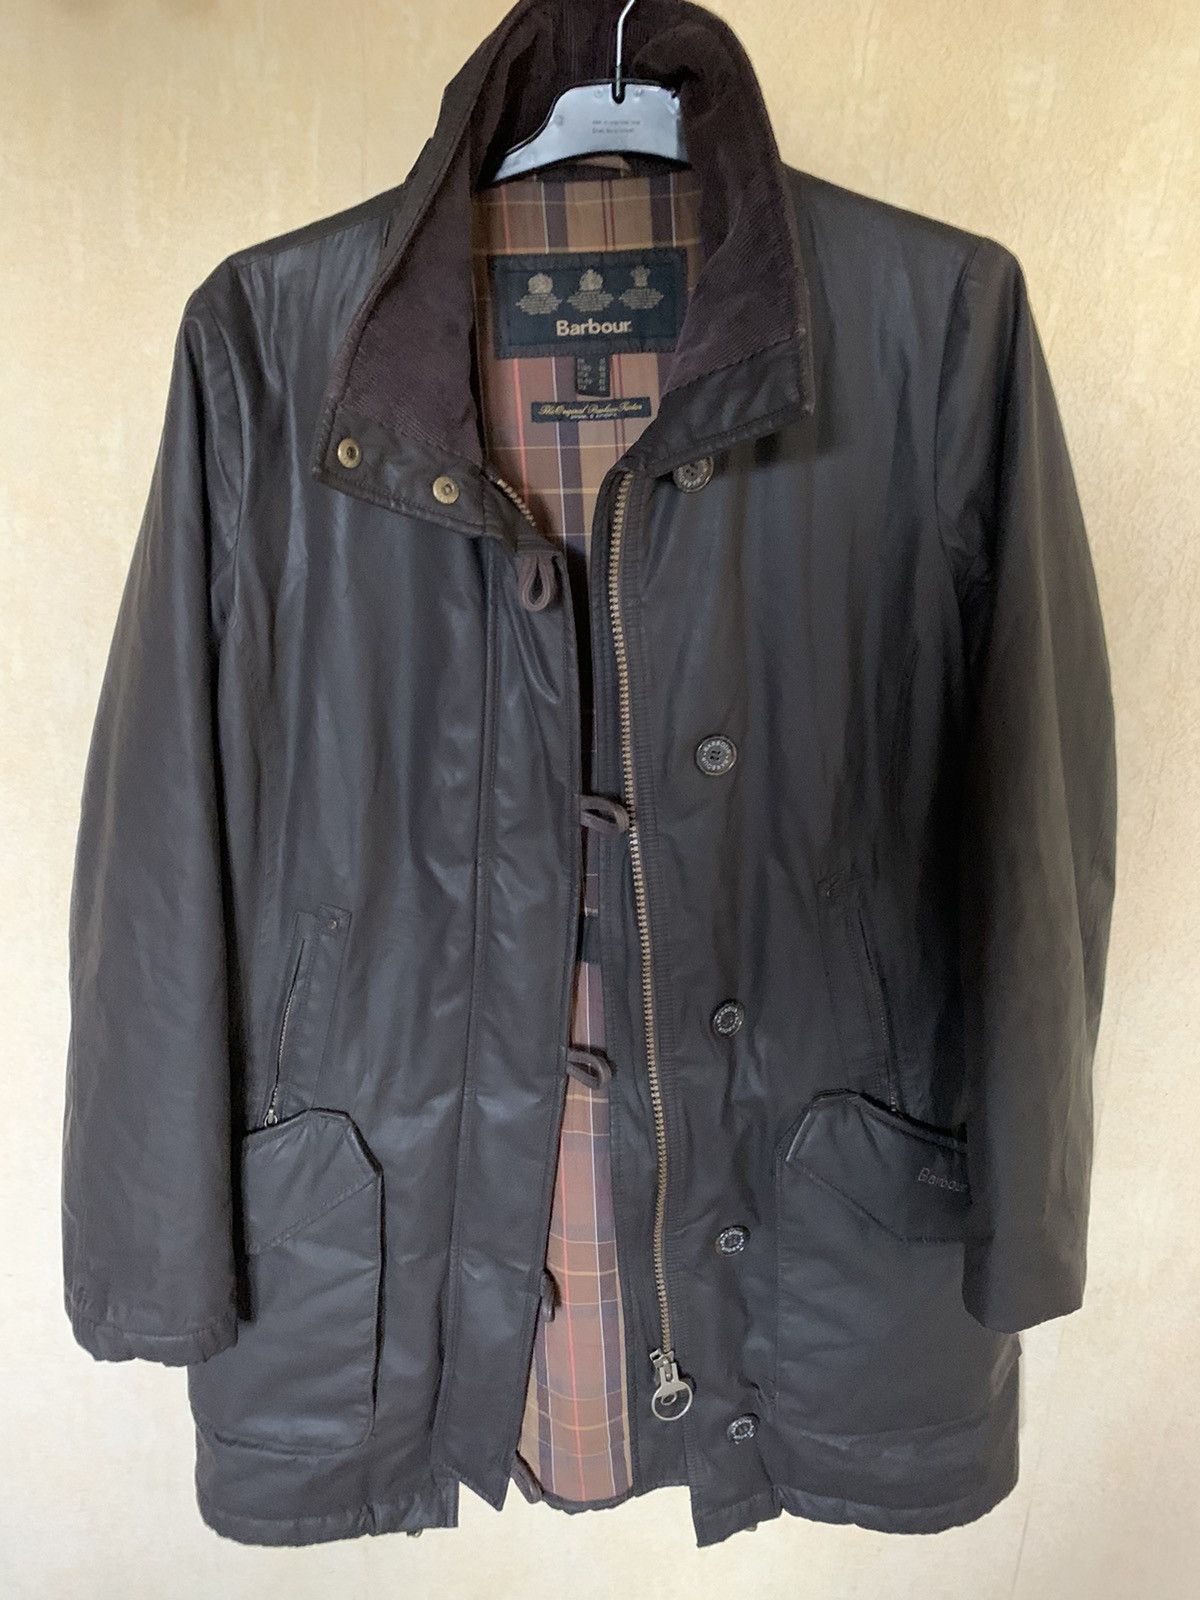 Barbour Rare Vintage Barbour Kombat Wax type jacket | Grailed